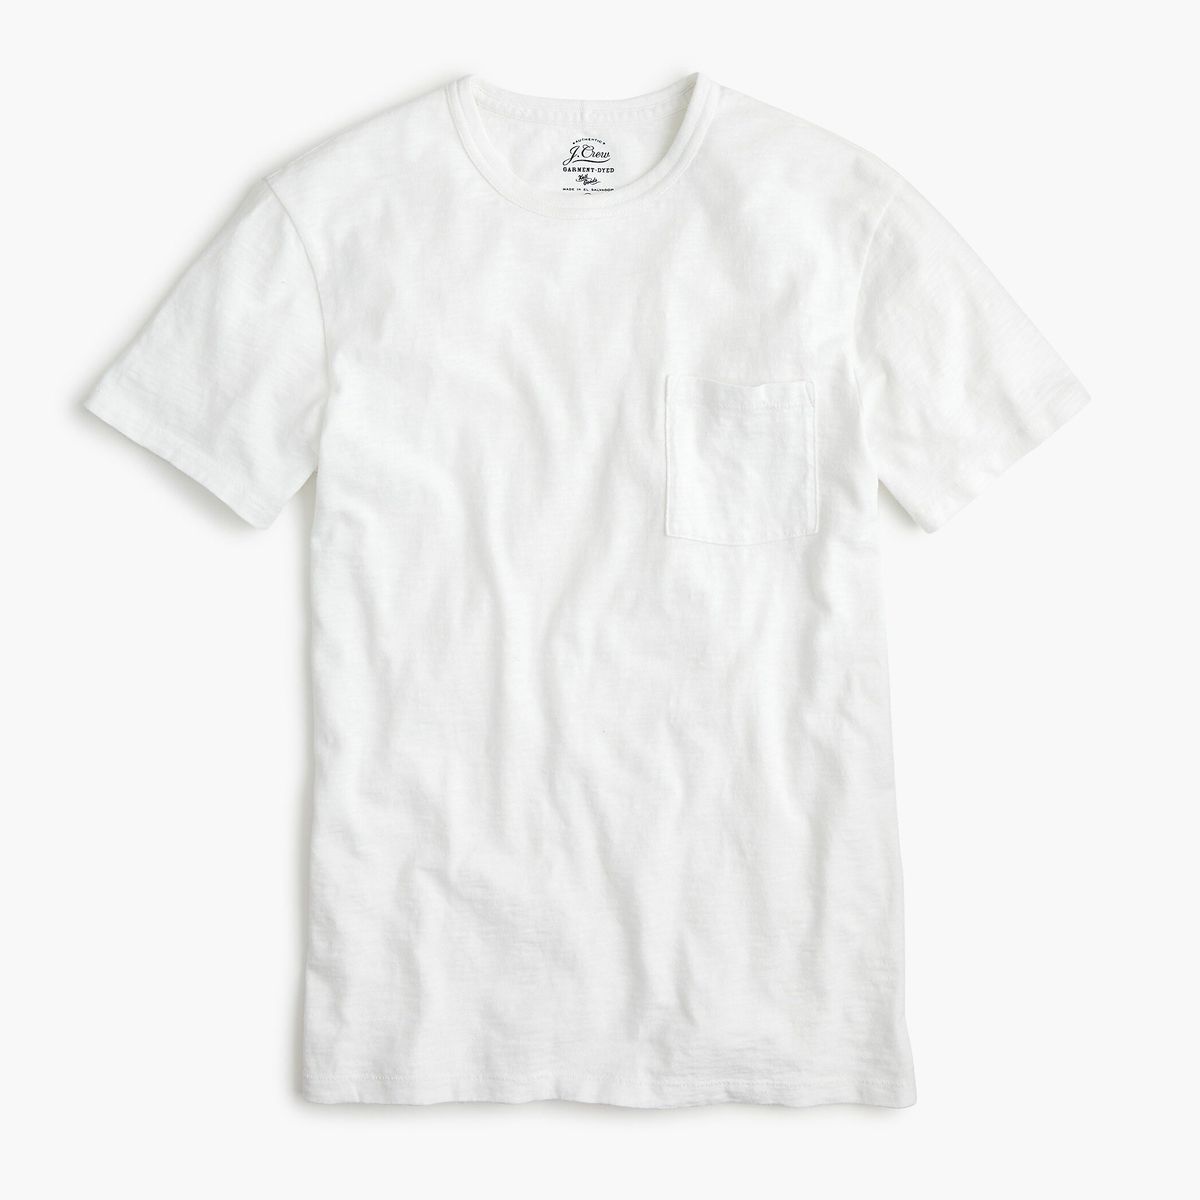 17 Best Men's White T-shirts 2021 | The 